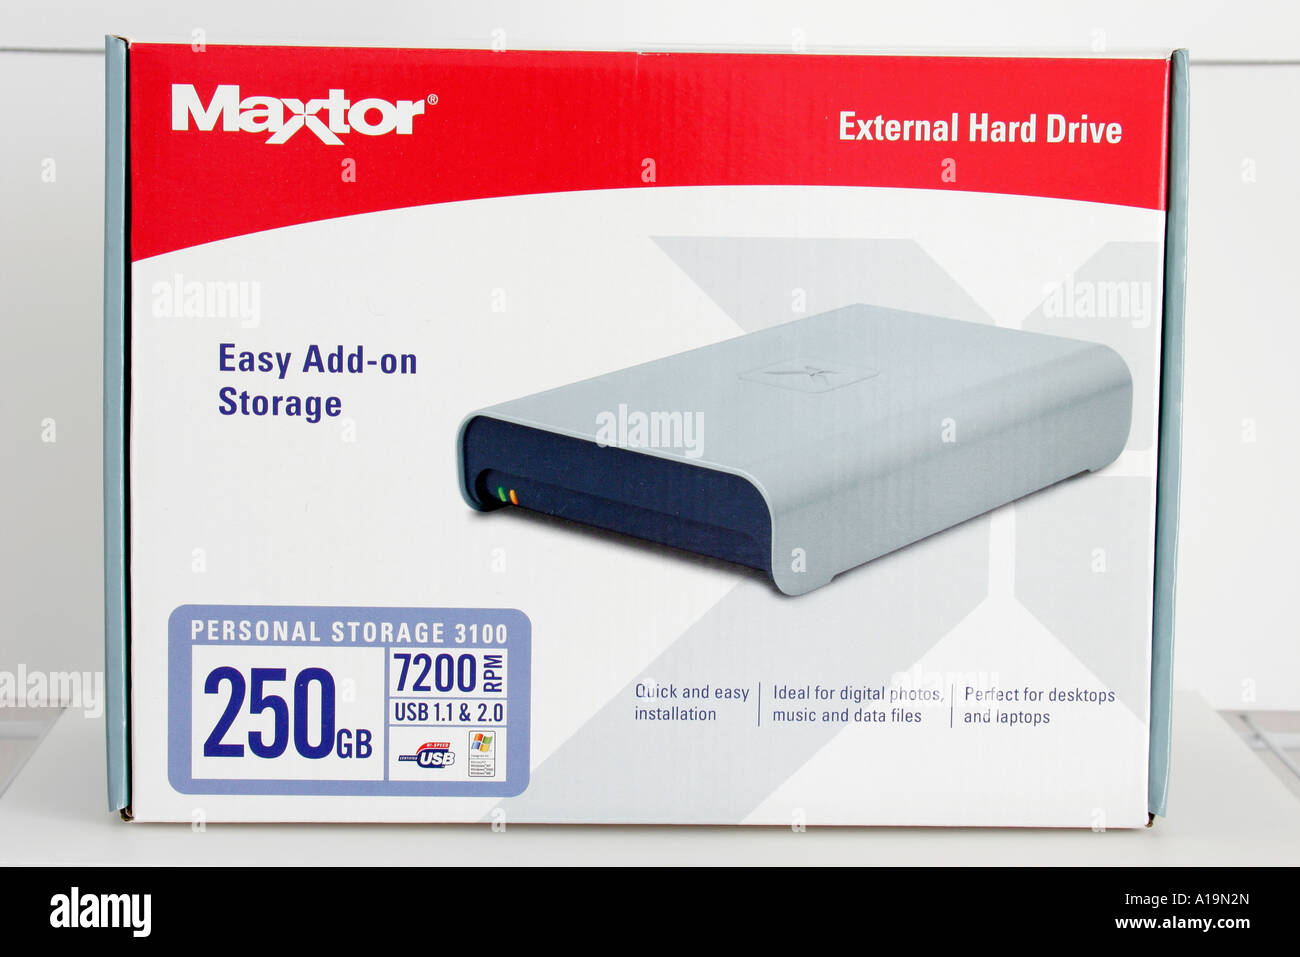 maxtor personal storage 3200 size